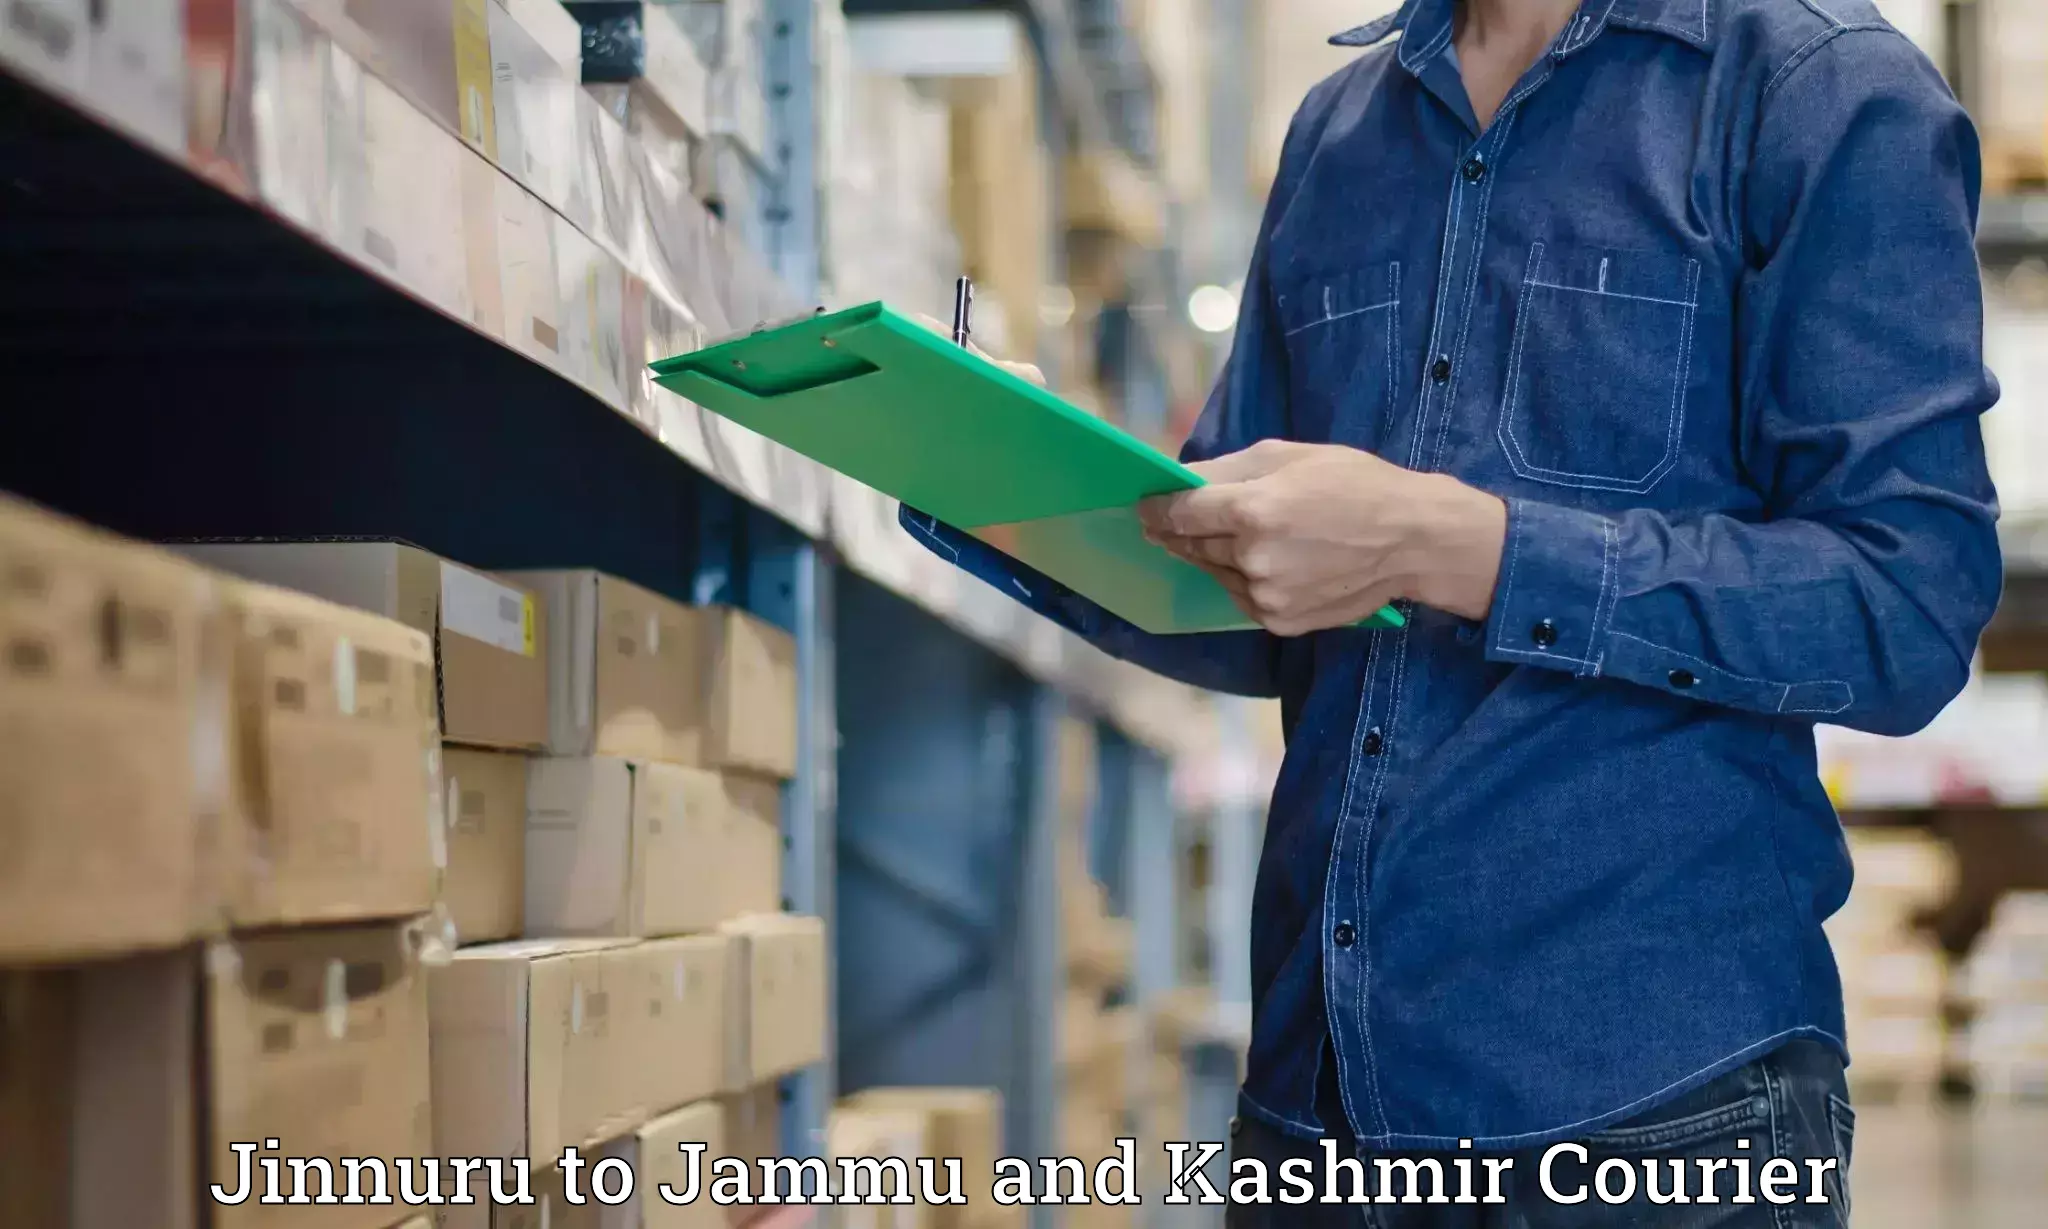 Bulk courier orders Jinnuru to Kishtwar